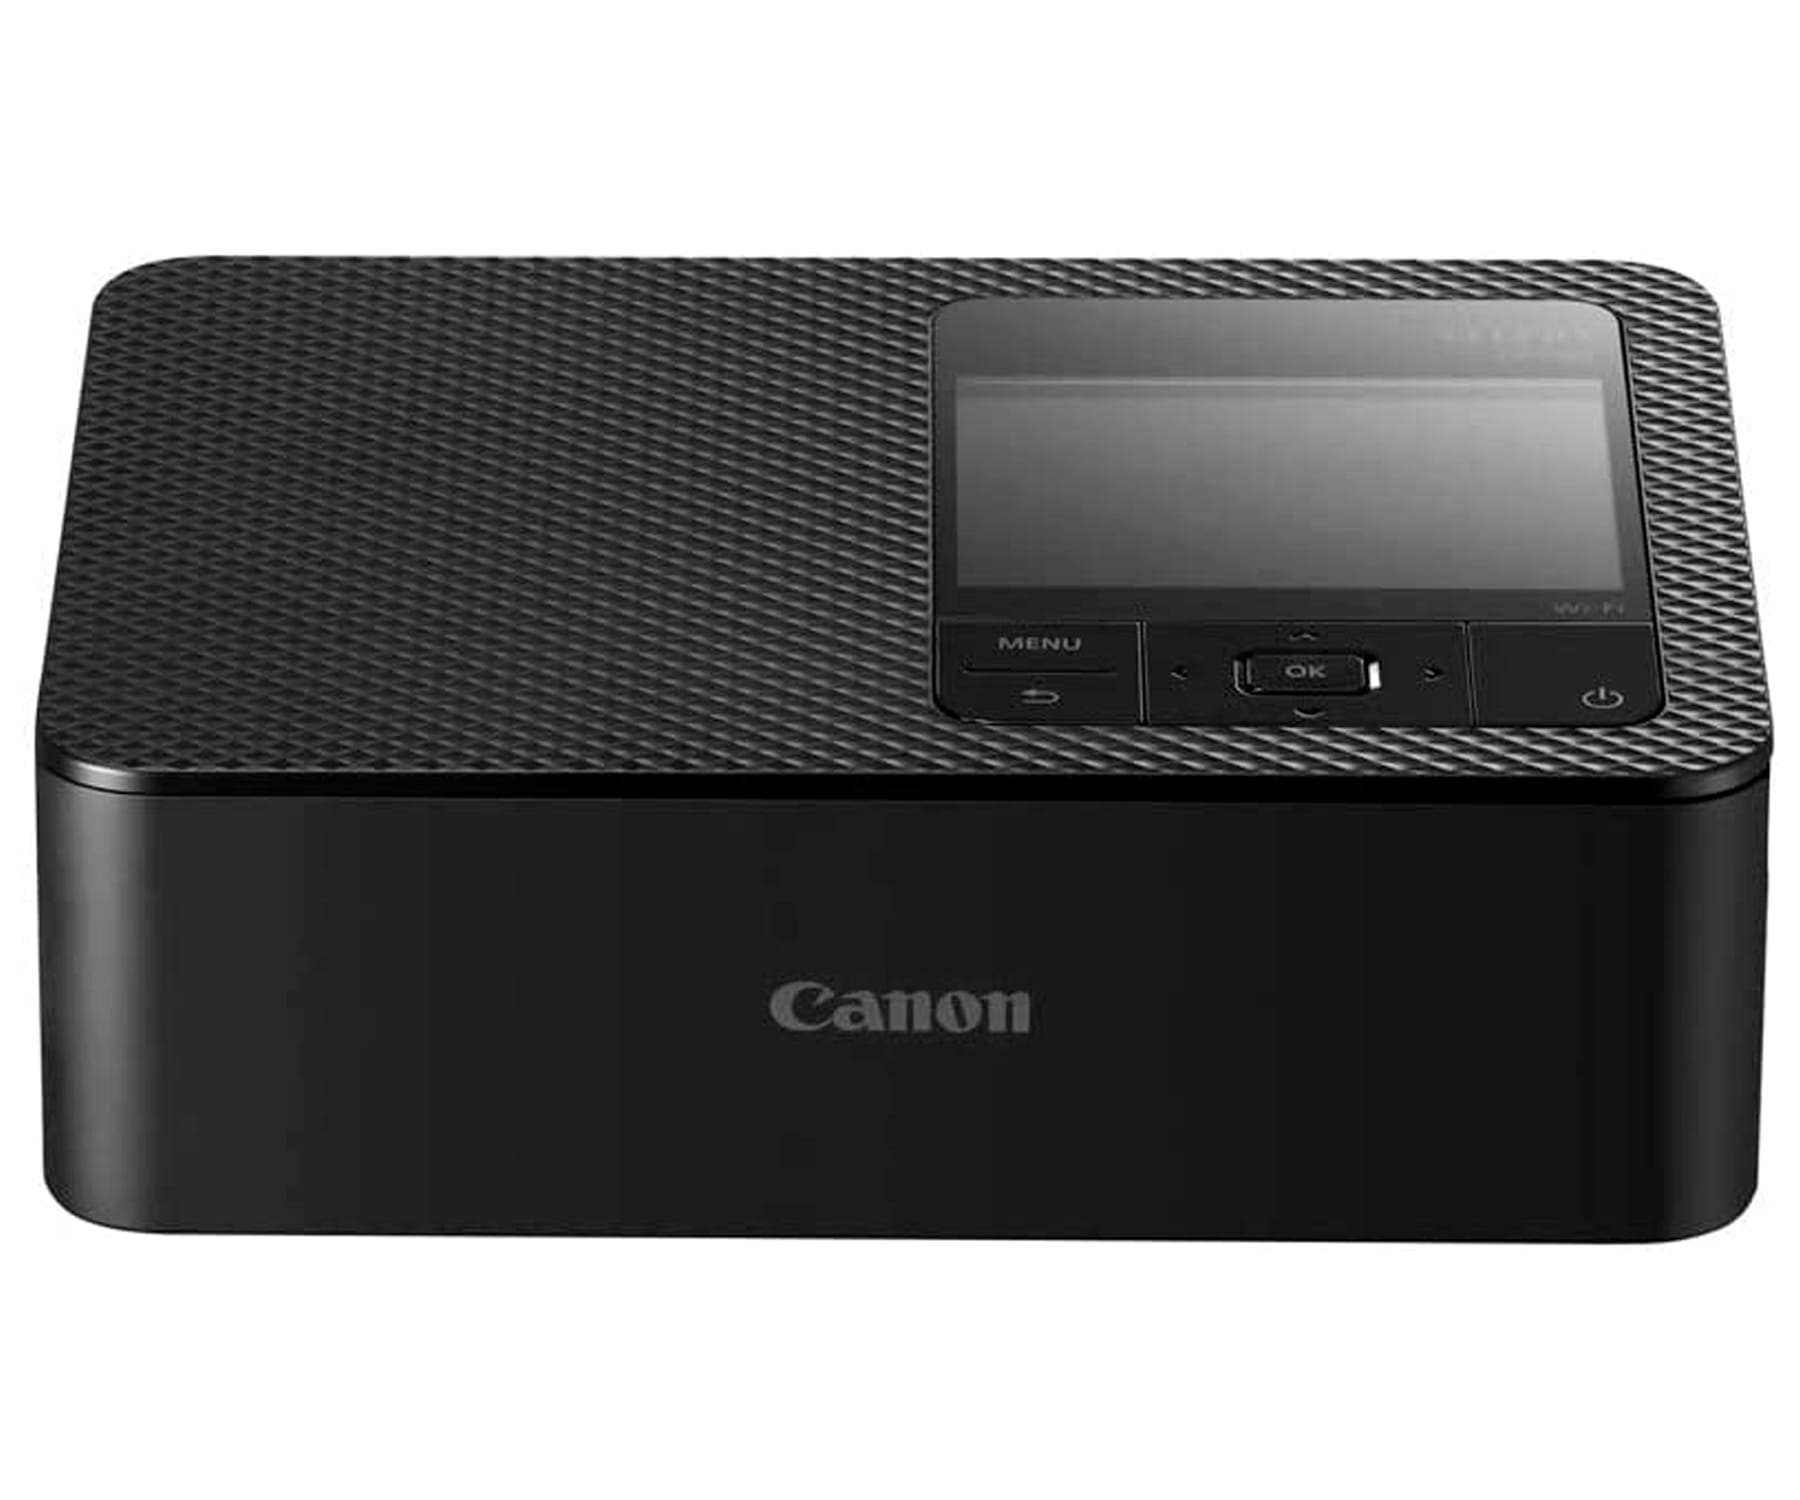 Canon Selphy CP1500 Black / Impresora fotográfica